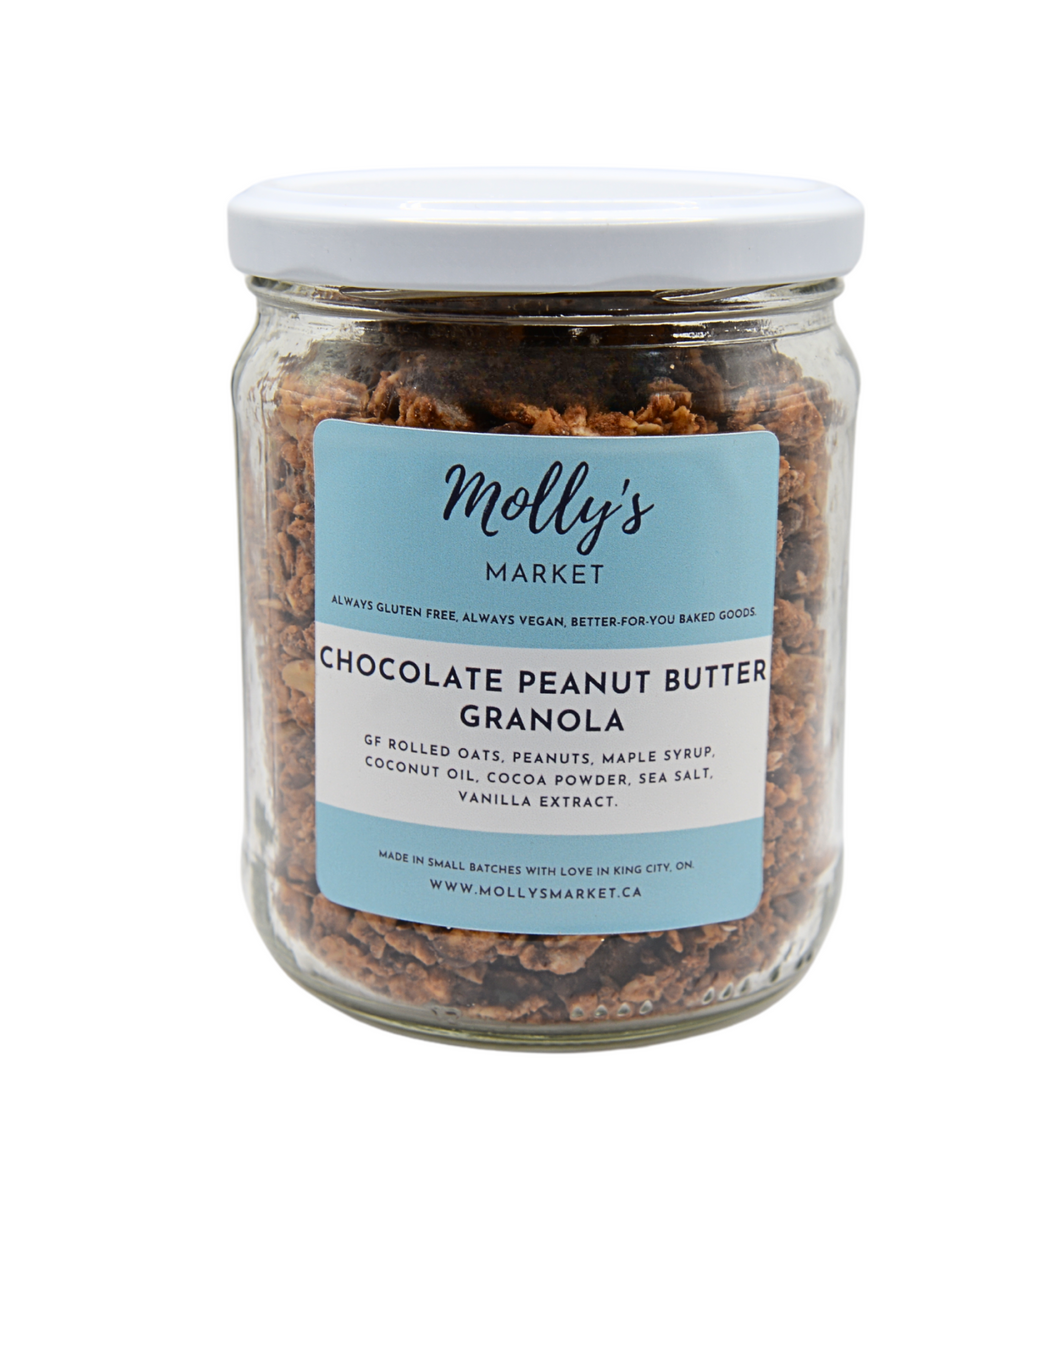 Molly's Chocolate Peanut Butter Granola